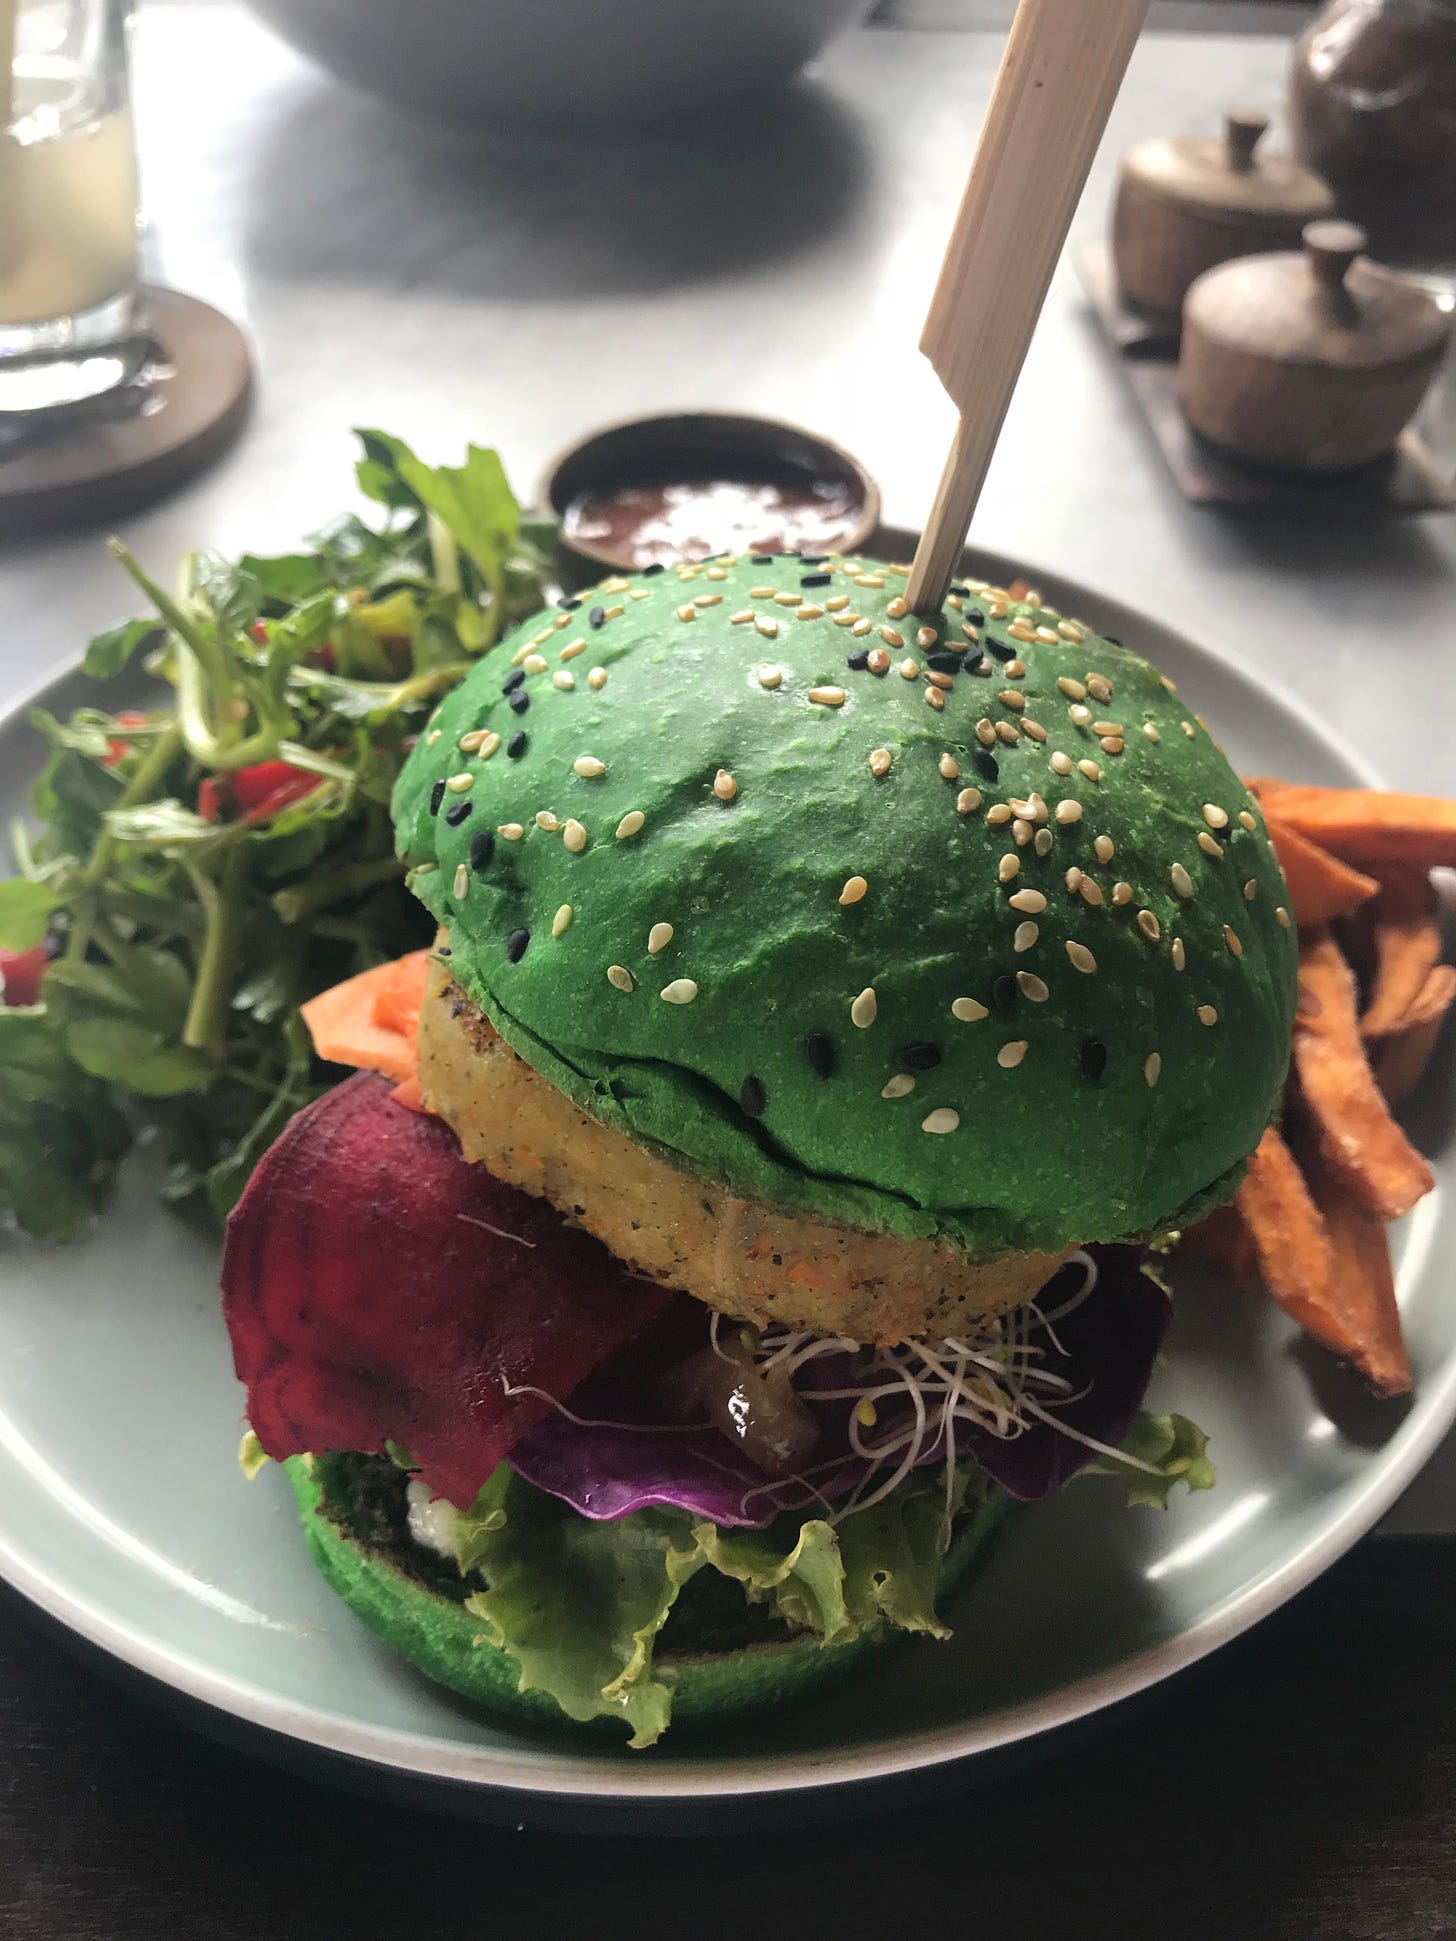 Veggie burgers and green buns